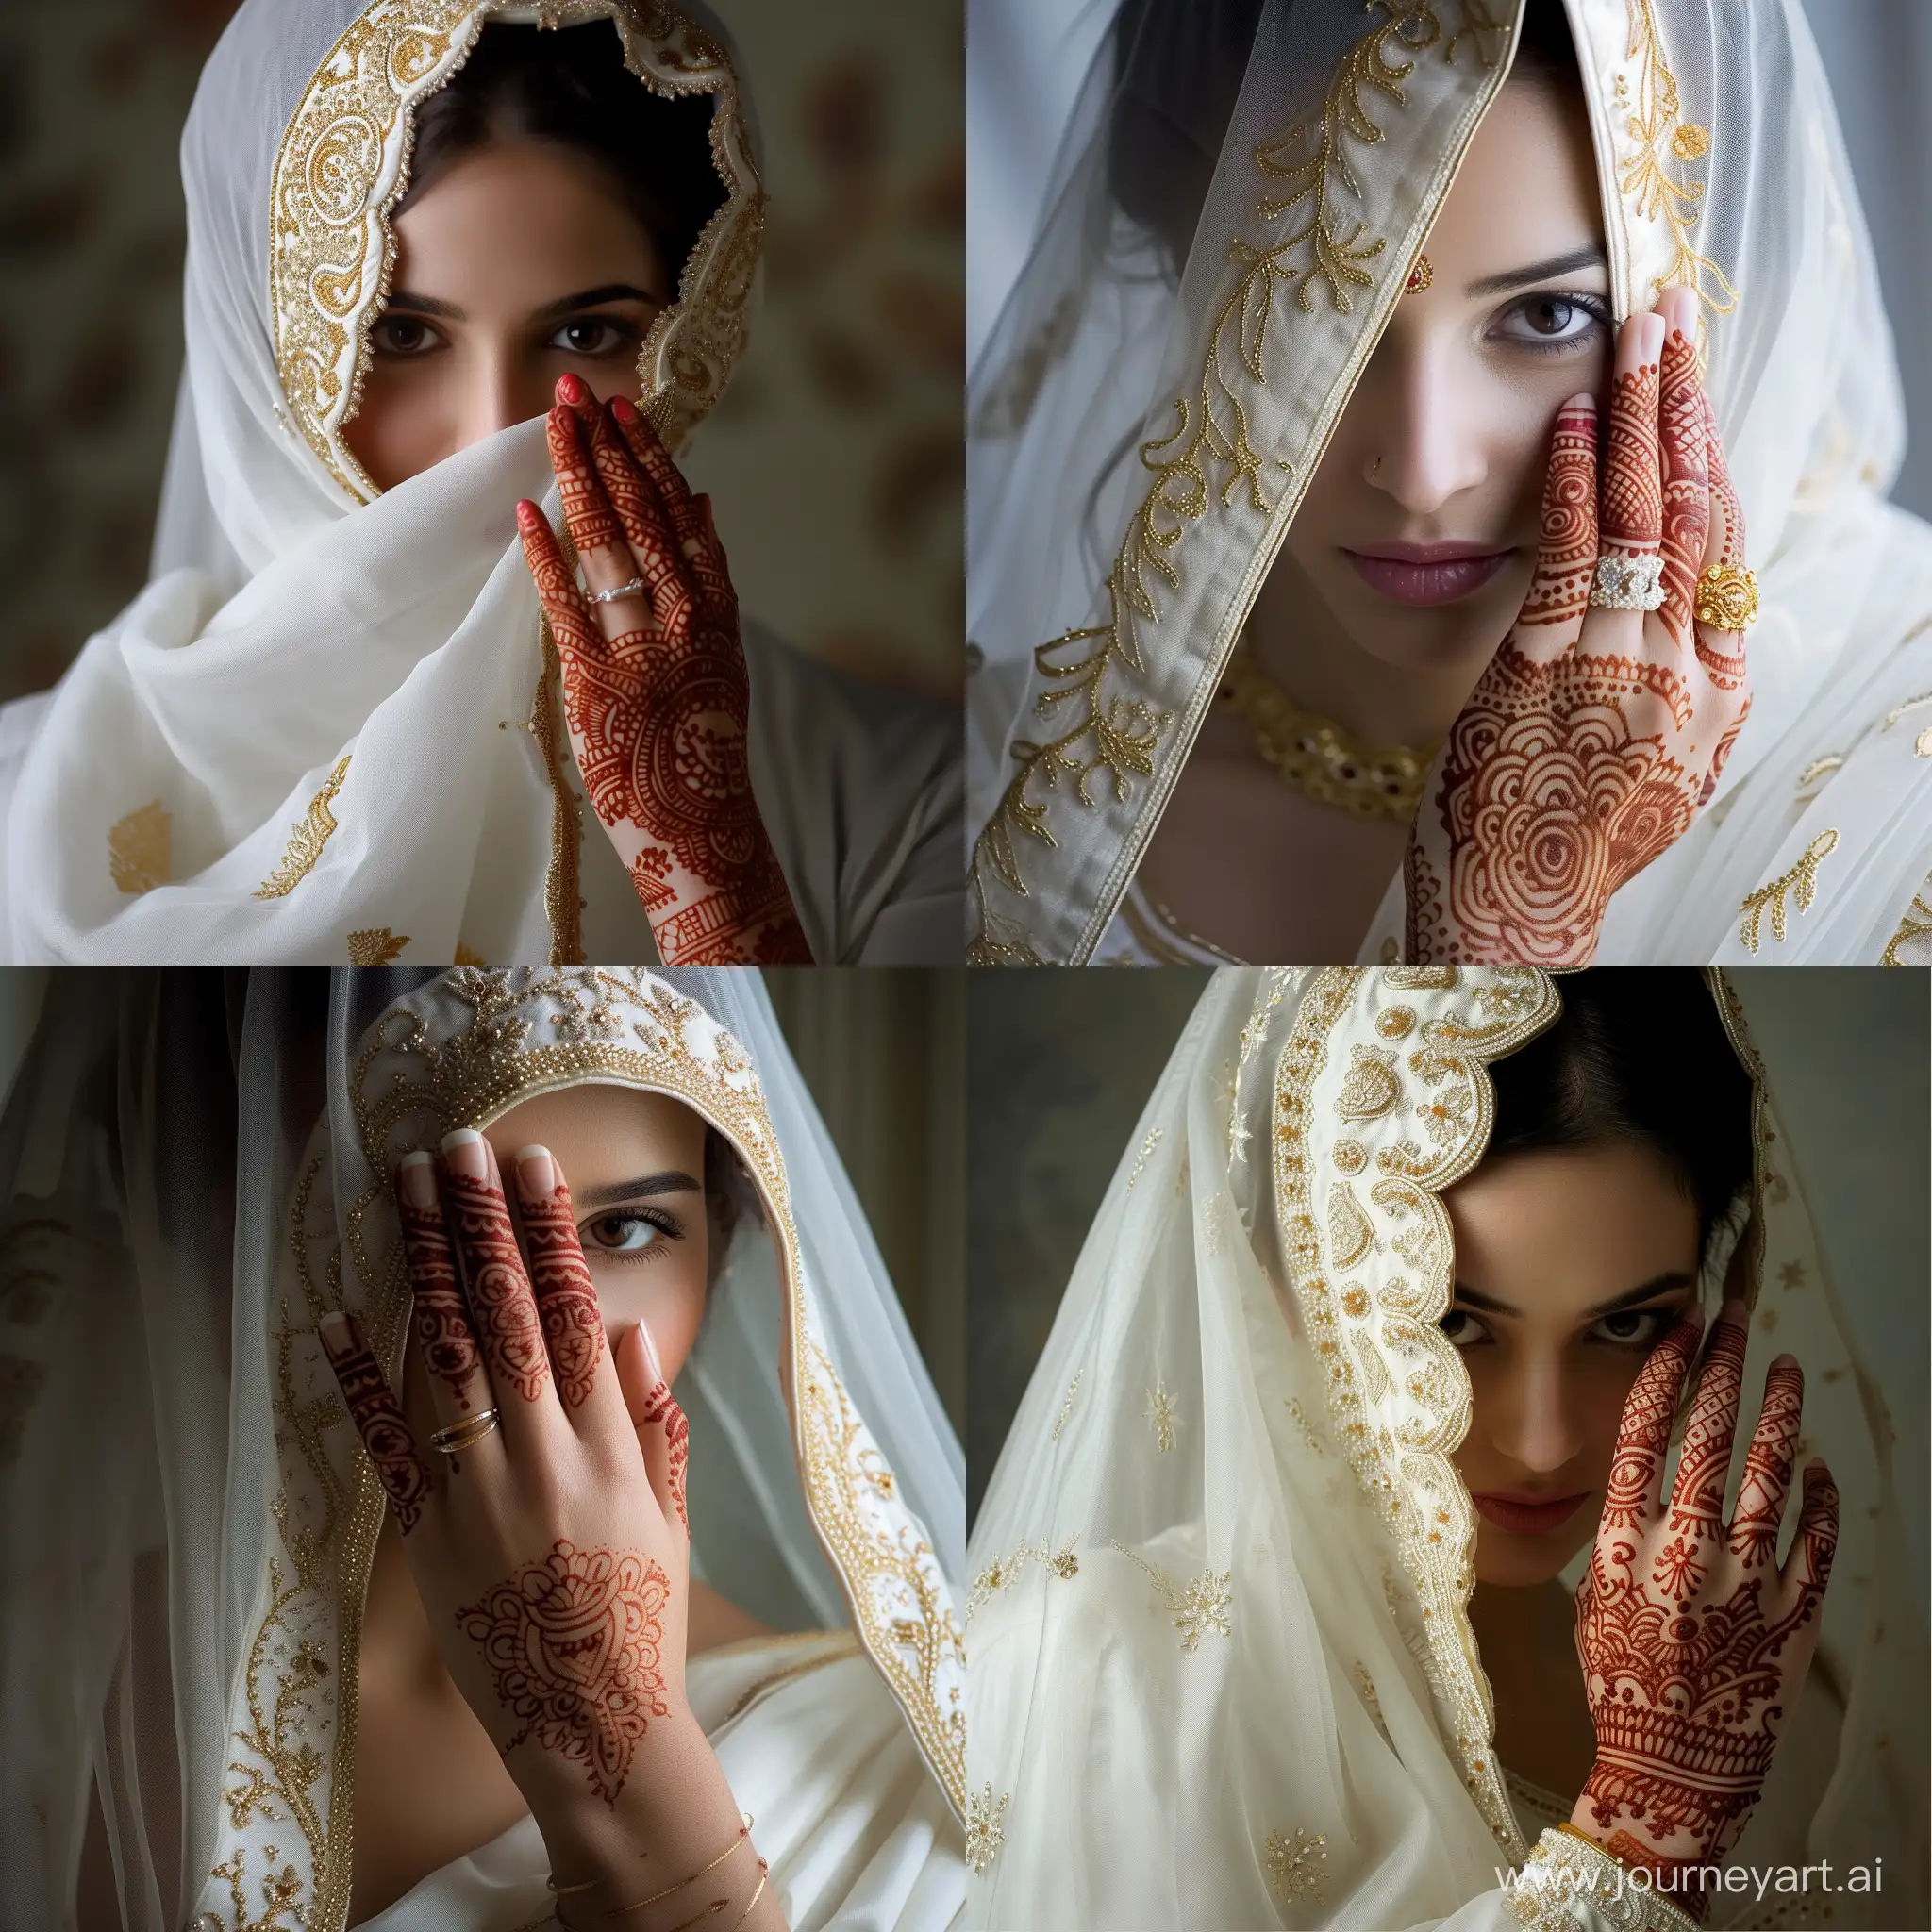 Elegant-Indian-Bride-in-GoldenEmbroidered-White-Saree-with-Henna-Patterns